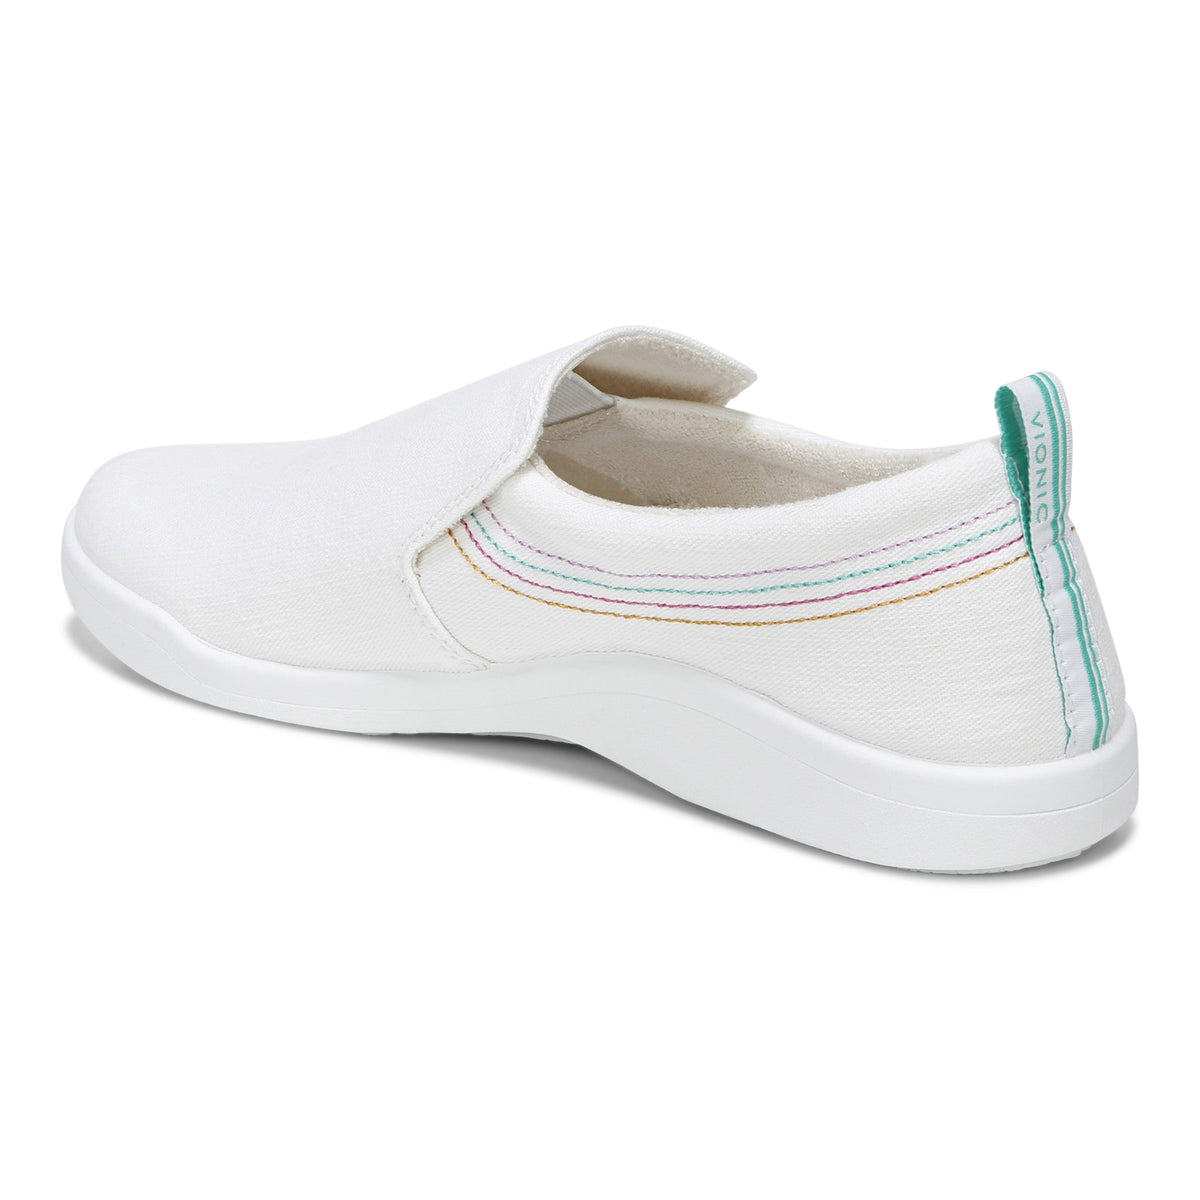 Vionic Women's Marshall White Canvas Slip On Orthotic Sneaker Shoes - Women's ShoesVionic